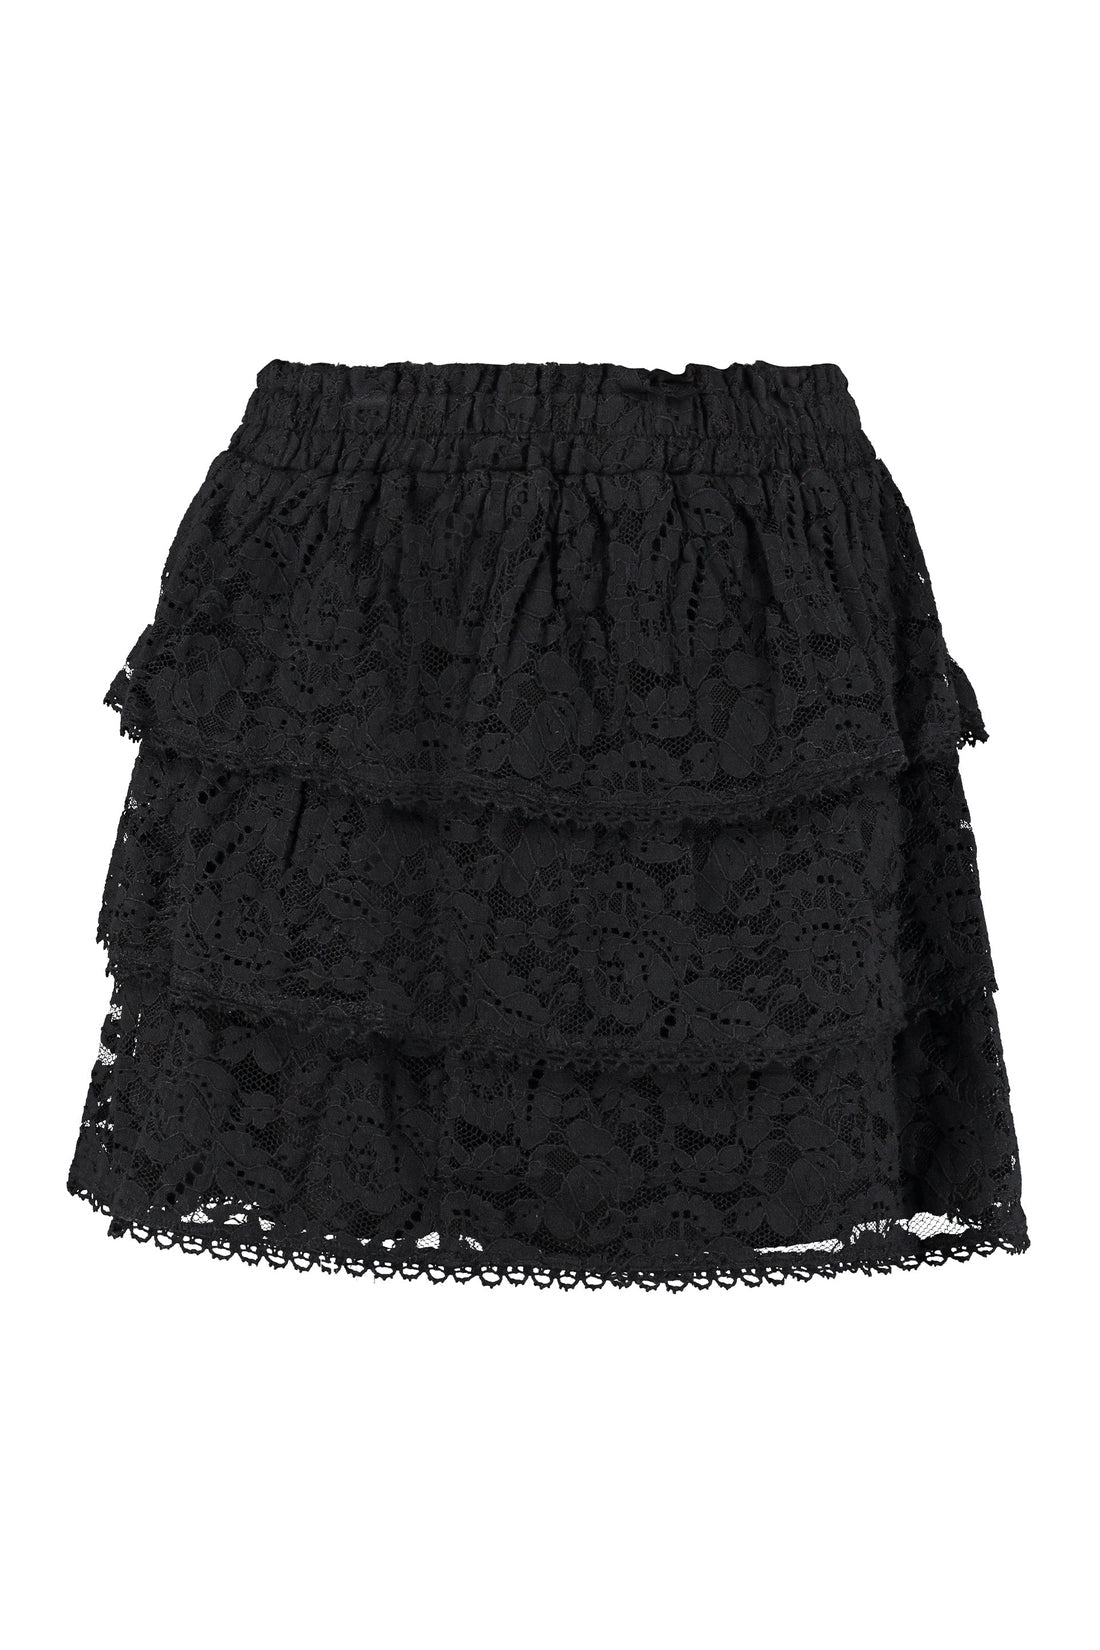 LoveShackFancy-OUTLET-SALE-Brynlee lace skirt-ARCHIVIST